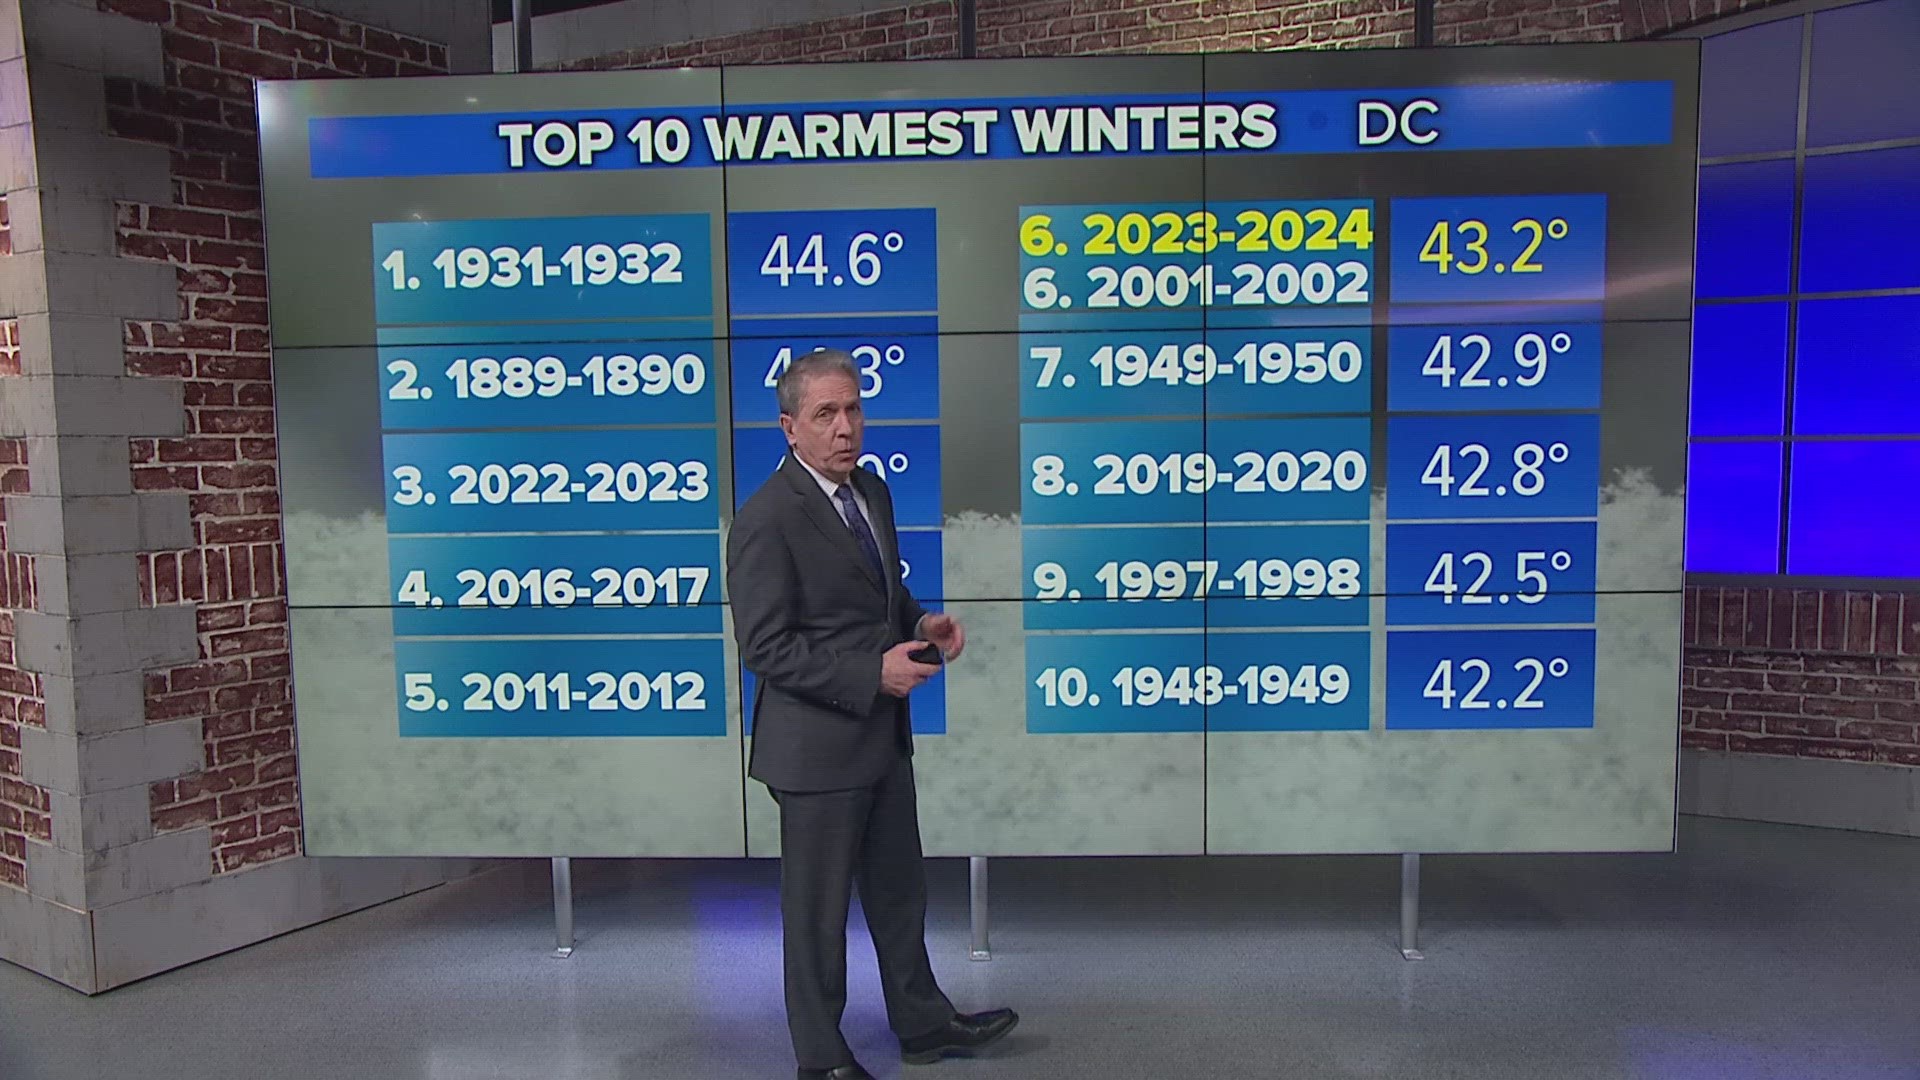 Washington, D.C. hasn't had a snowier than average winter since 2018-2019.